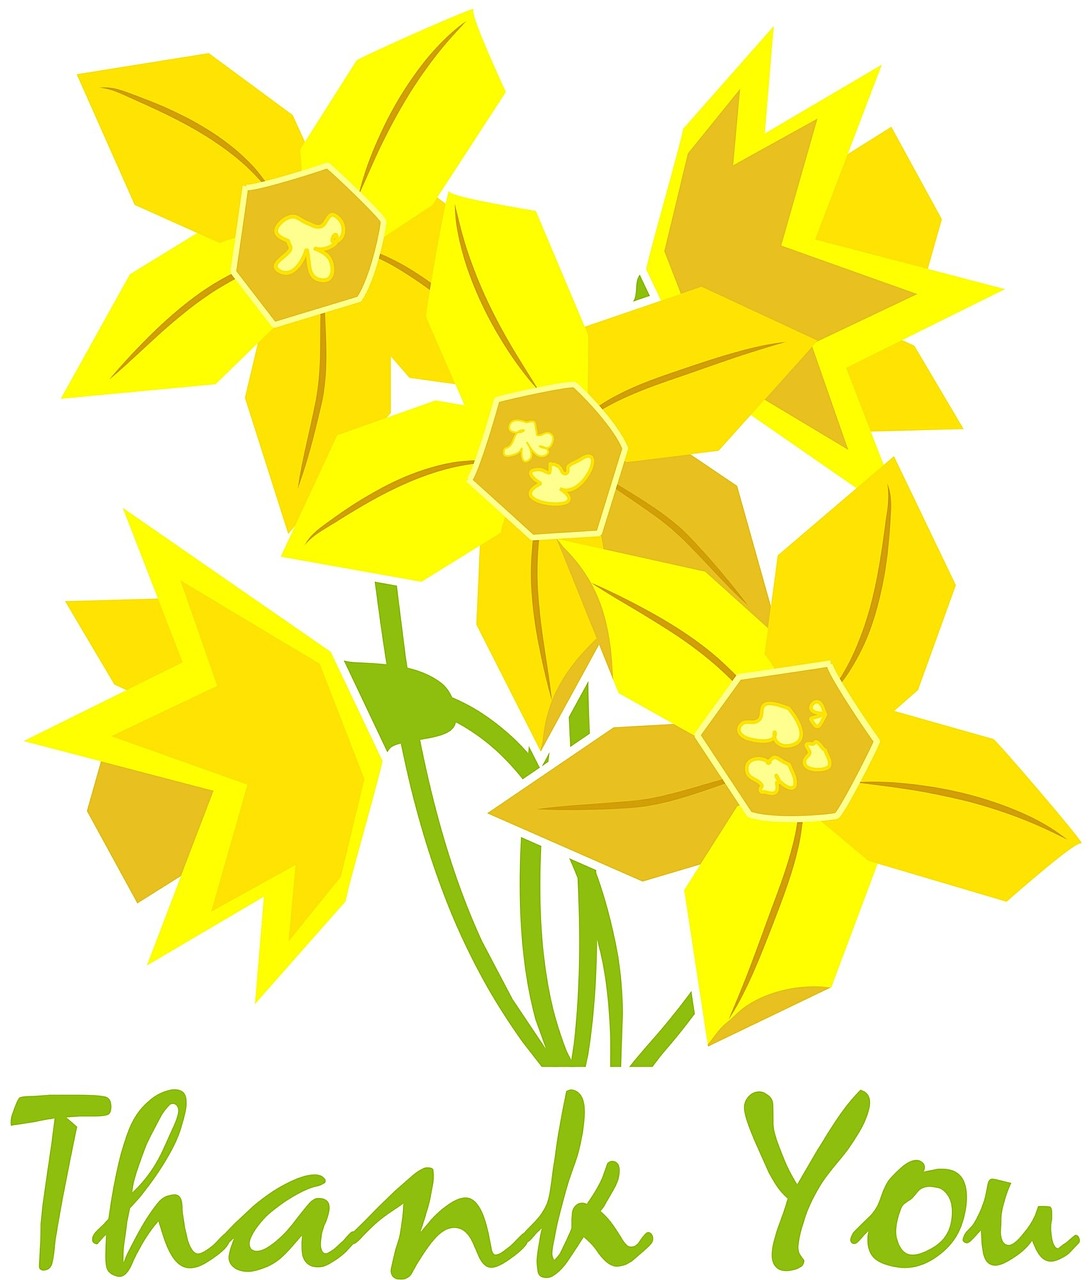 Pavasaris, Narcizai, Geltona, Dėkoju, Ačiū, Augalas, Gamta, Augimas, Botanika, Sezonas